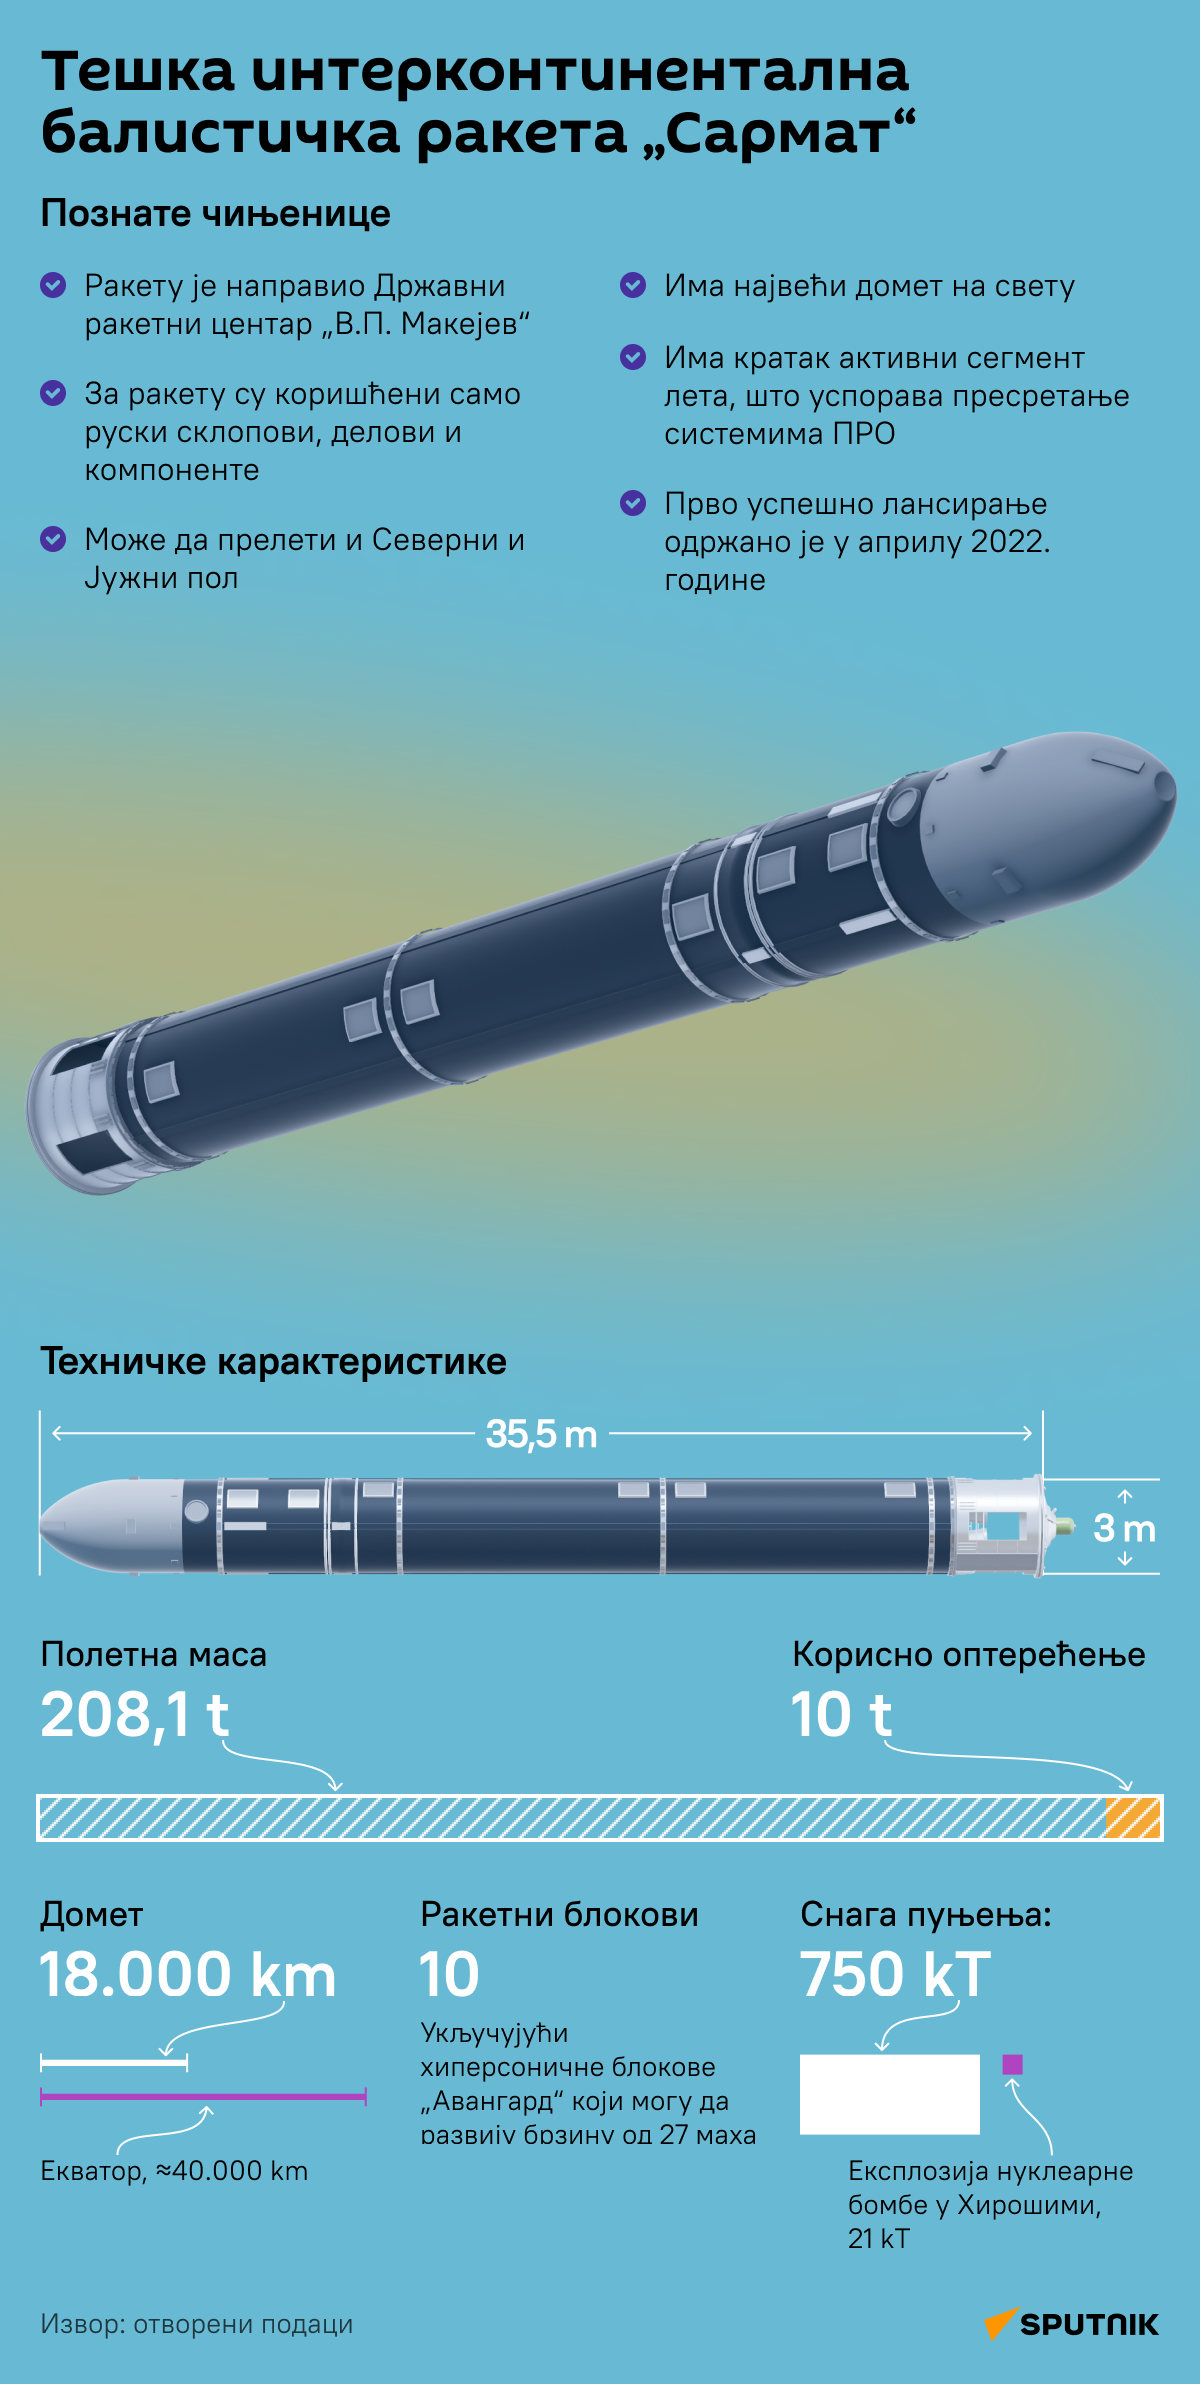 Инфографика Тешка ракета Сармат ЋИРИЛИЦА деск - Sputnik Србија